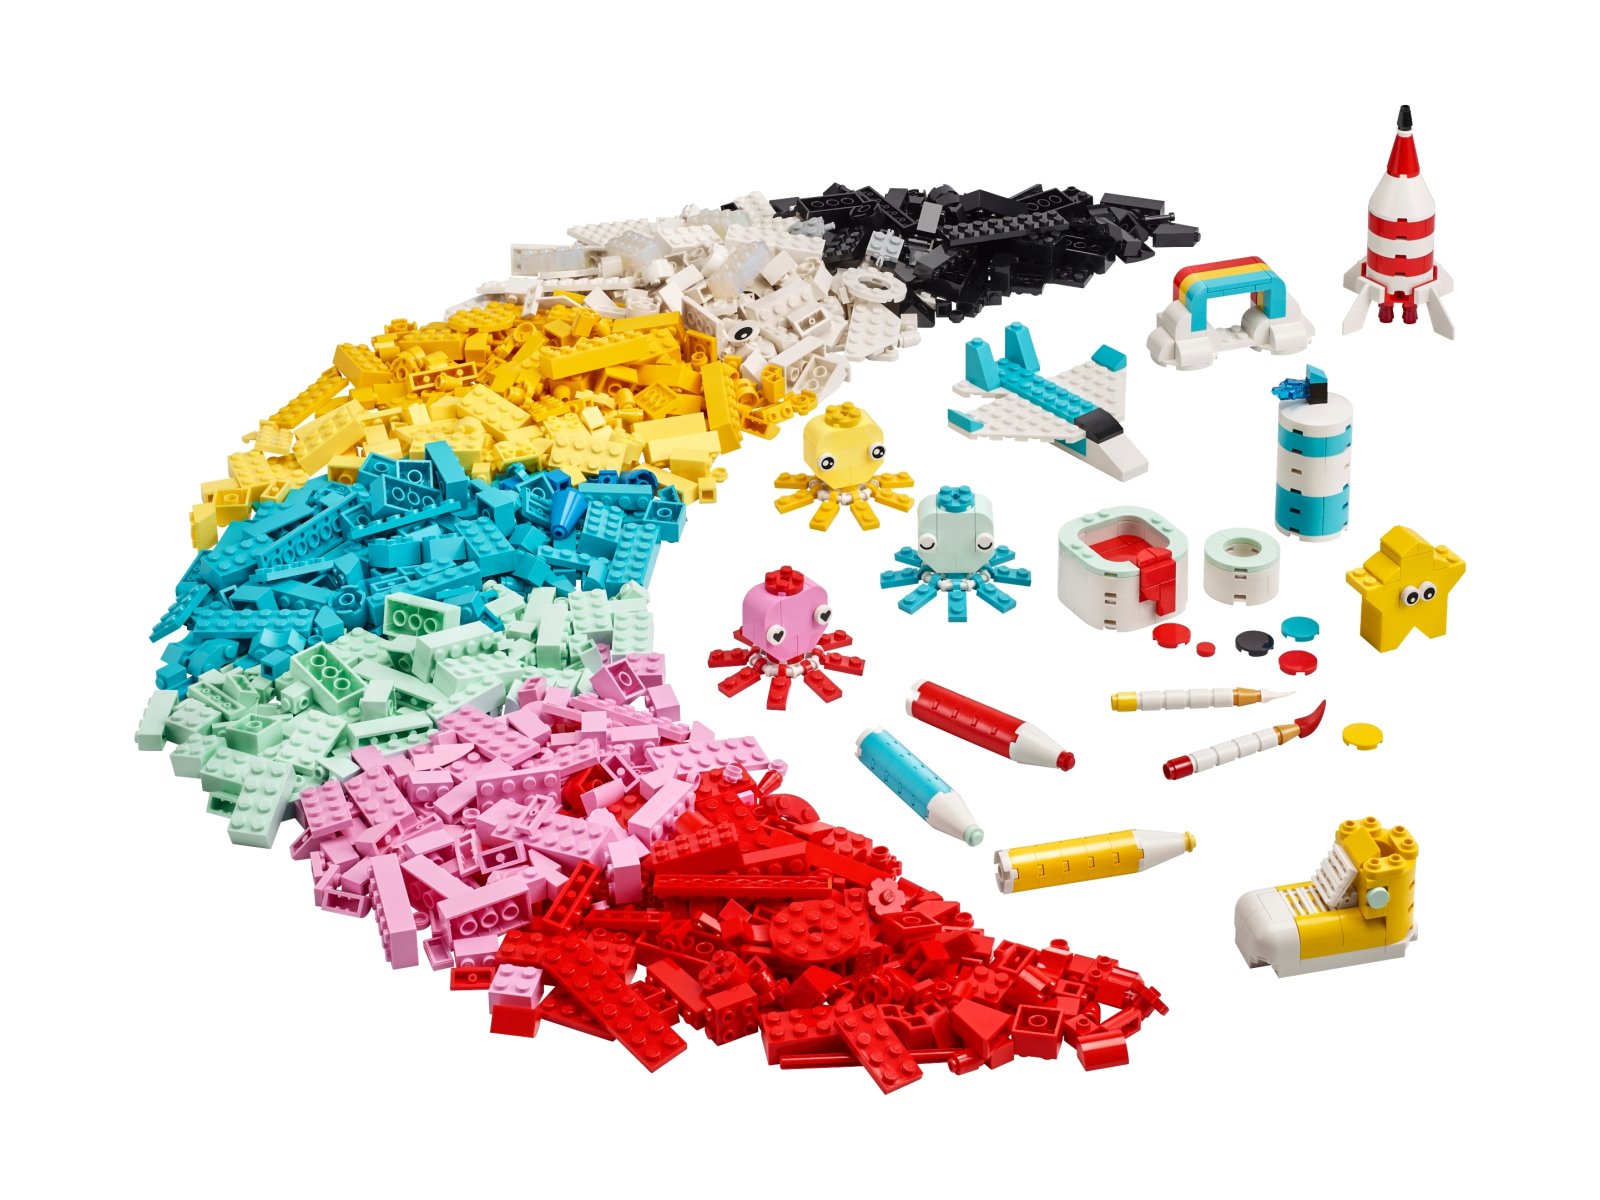 LEGO 11032 Classic Kreatywna zabawa kolorami